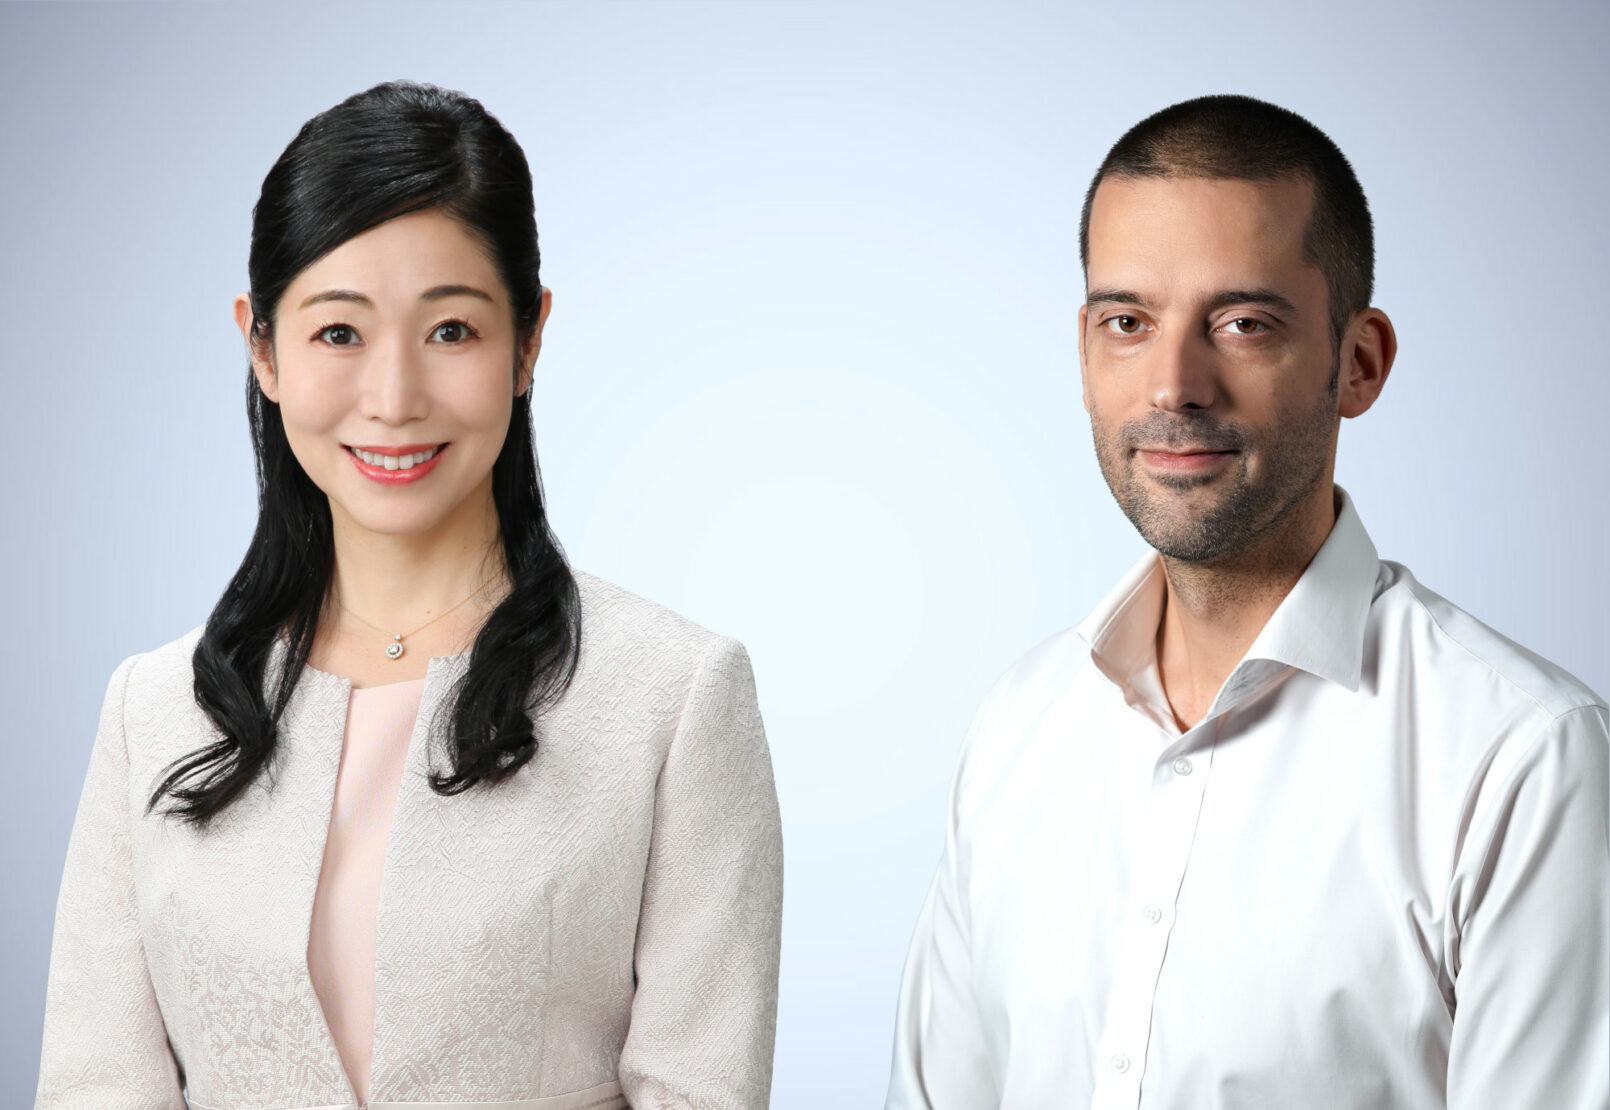 Meet the SCCIJ Members #14 – Rami Suzuki, CEO, and Eric Béguelin, Finance Director, Ferring Pharmaceuticals Japan